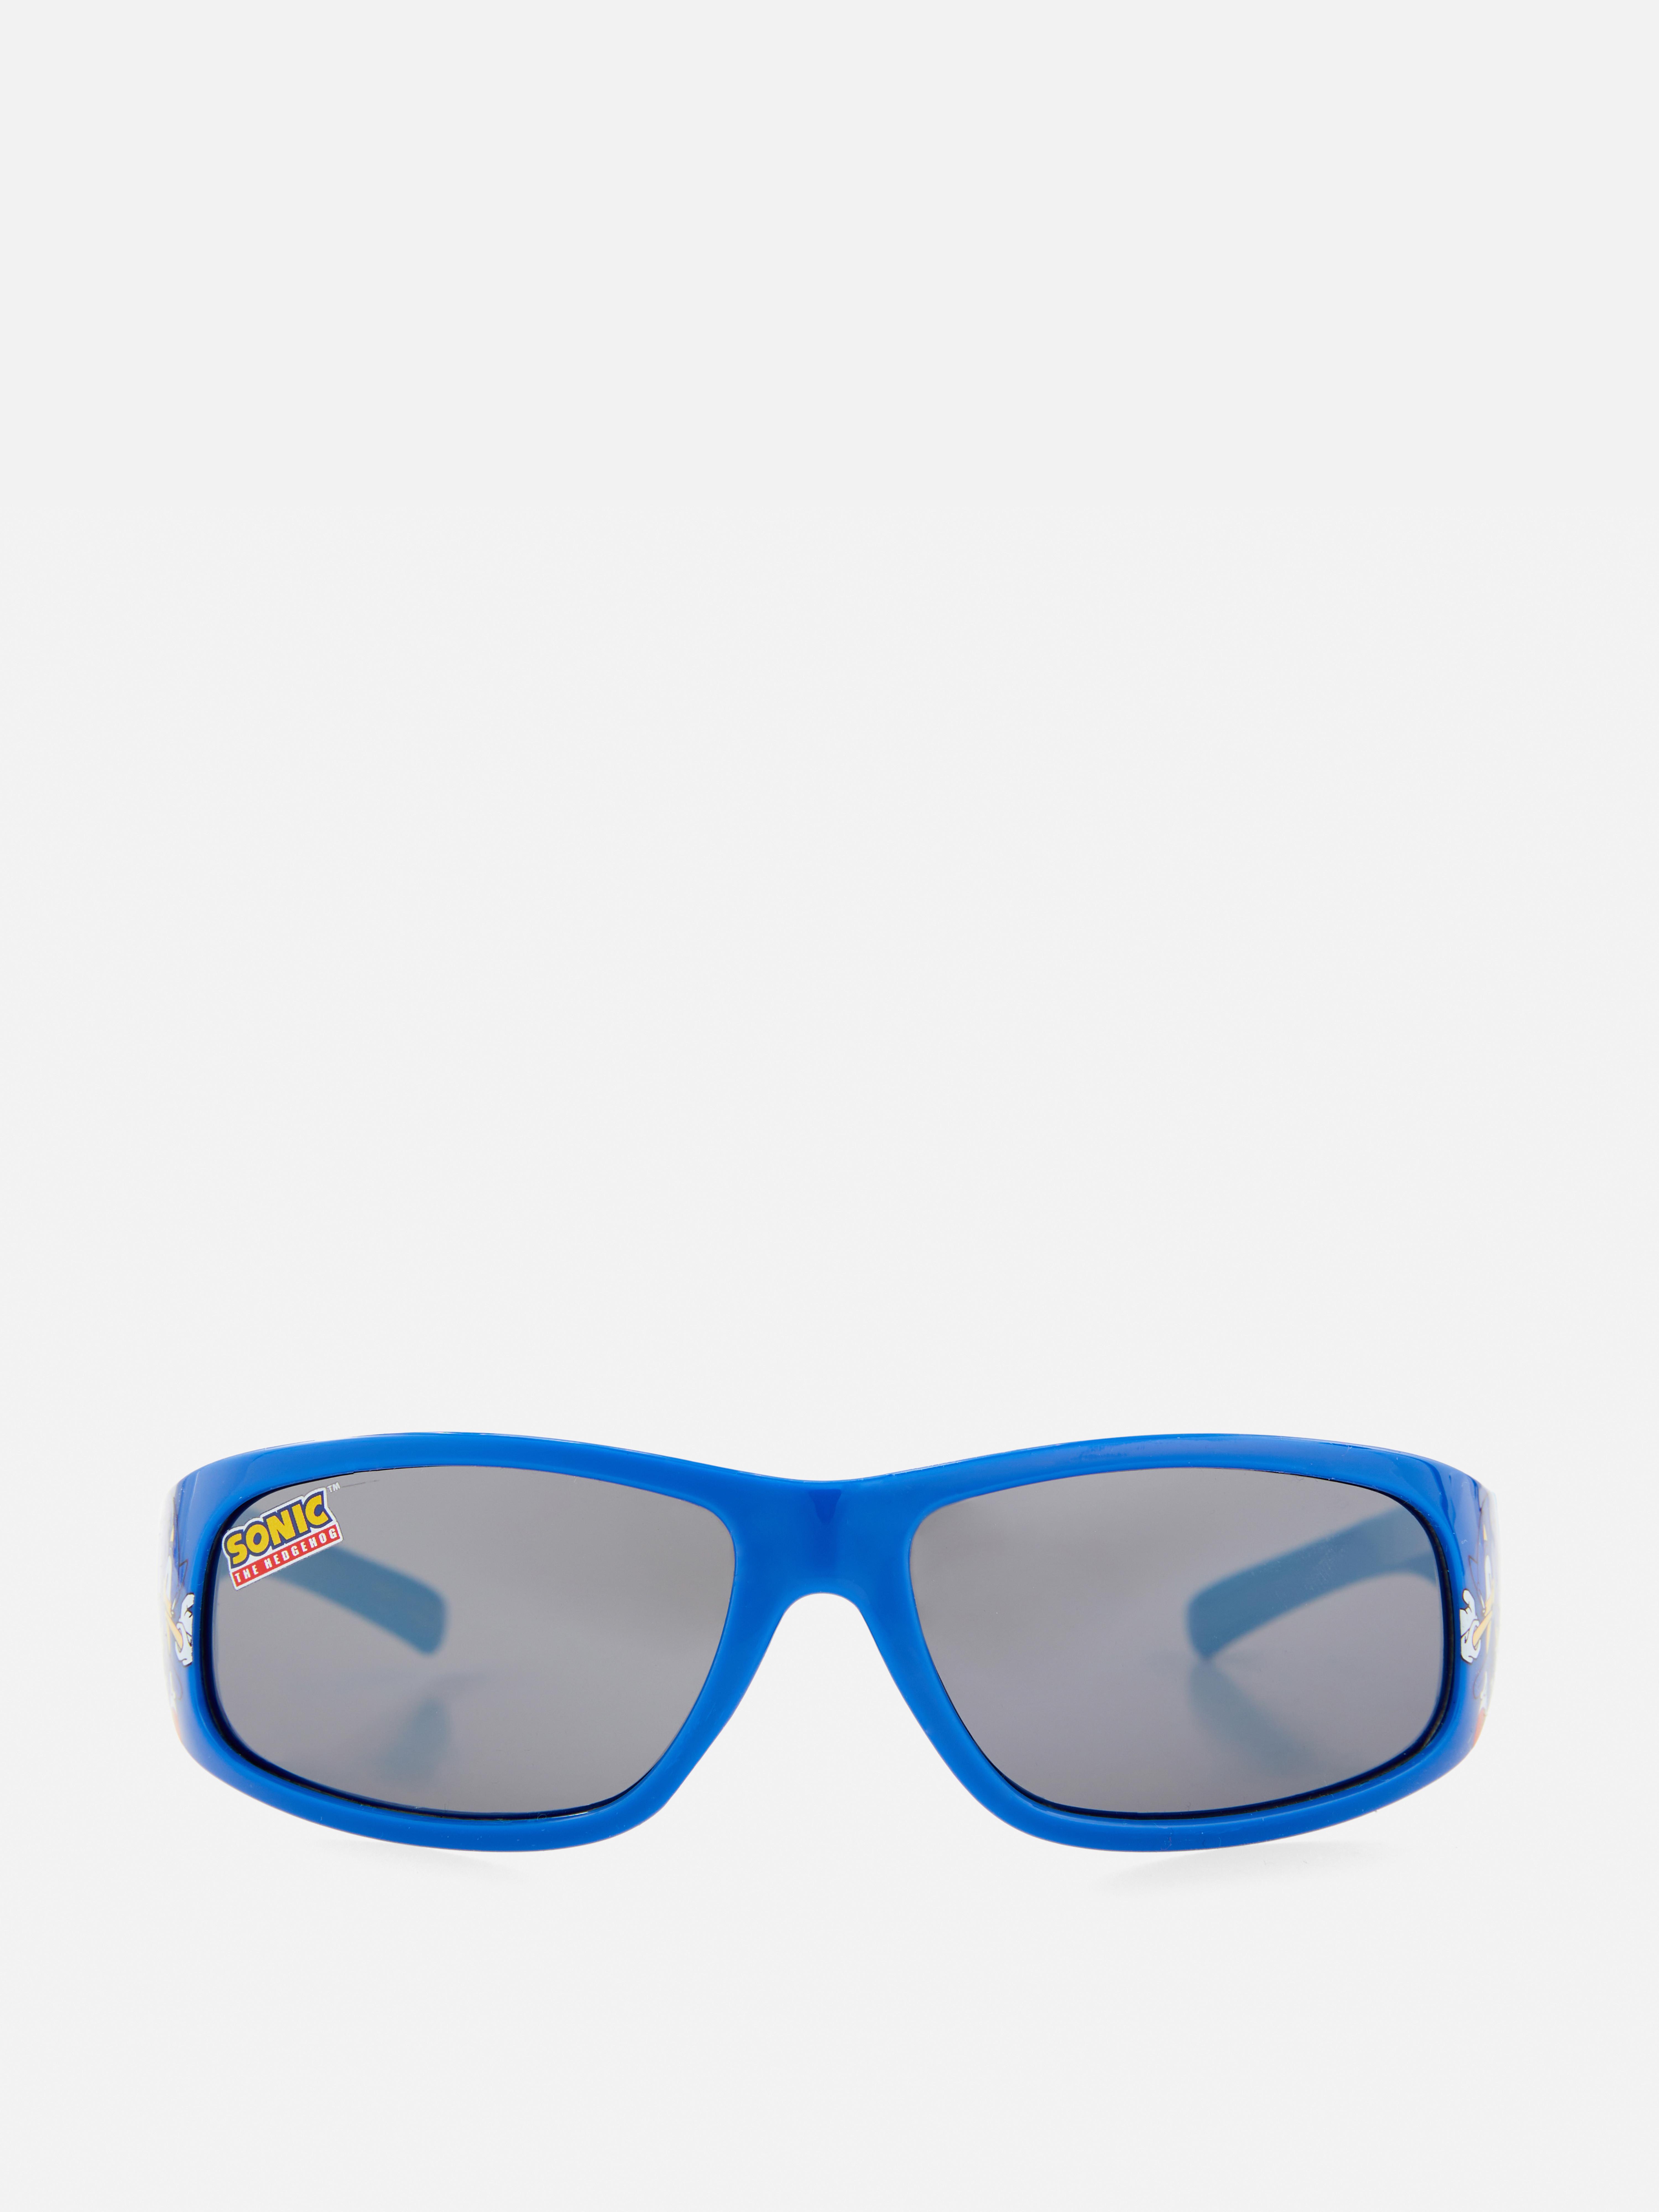 Sonic The Hedgehog Wrap-Around Sunglasses